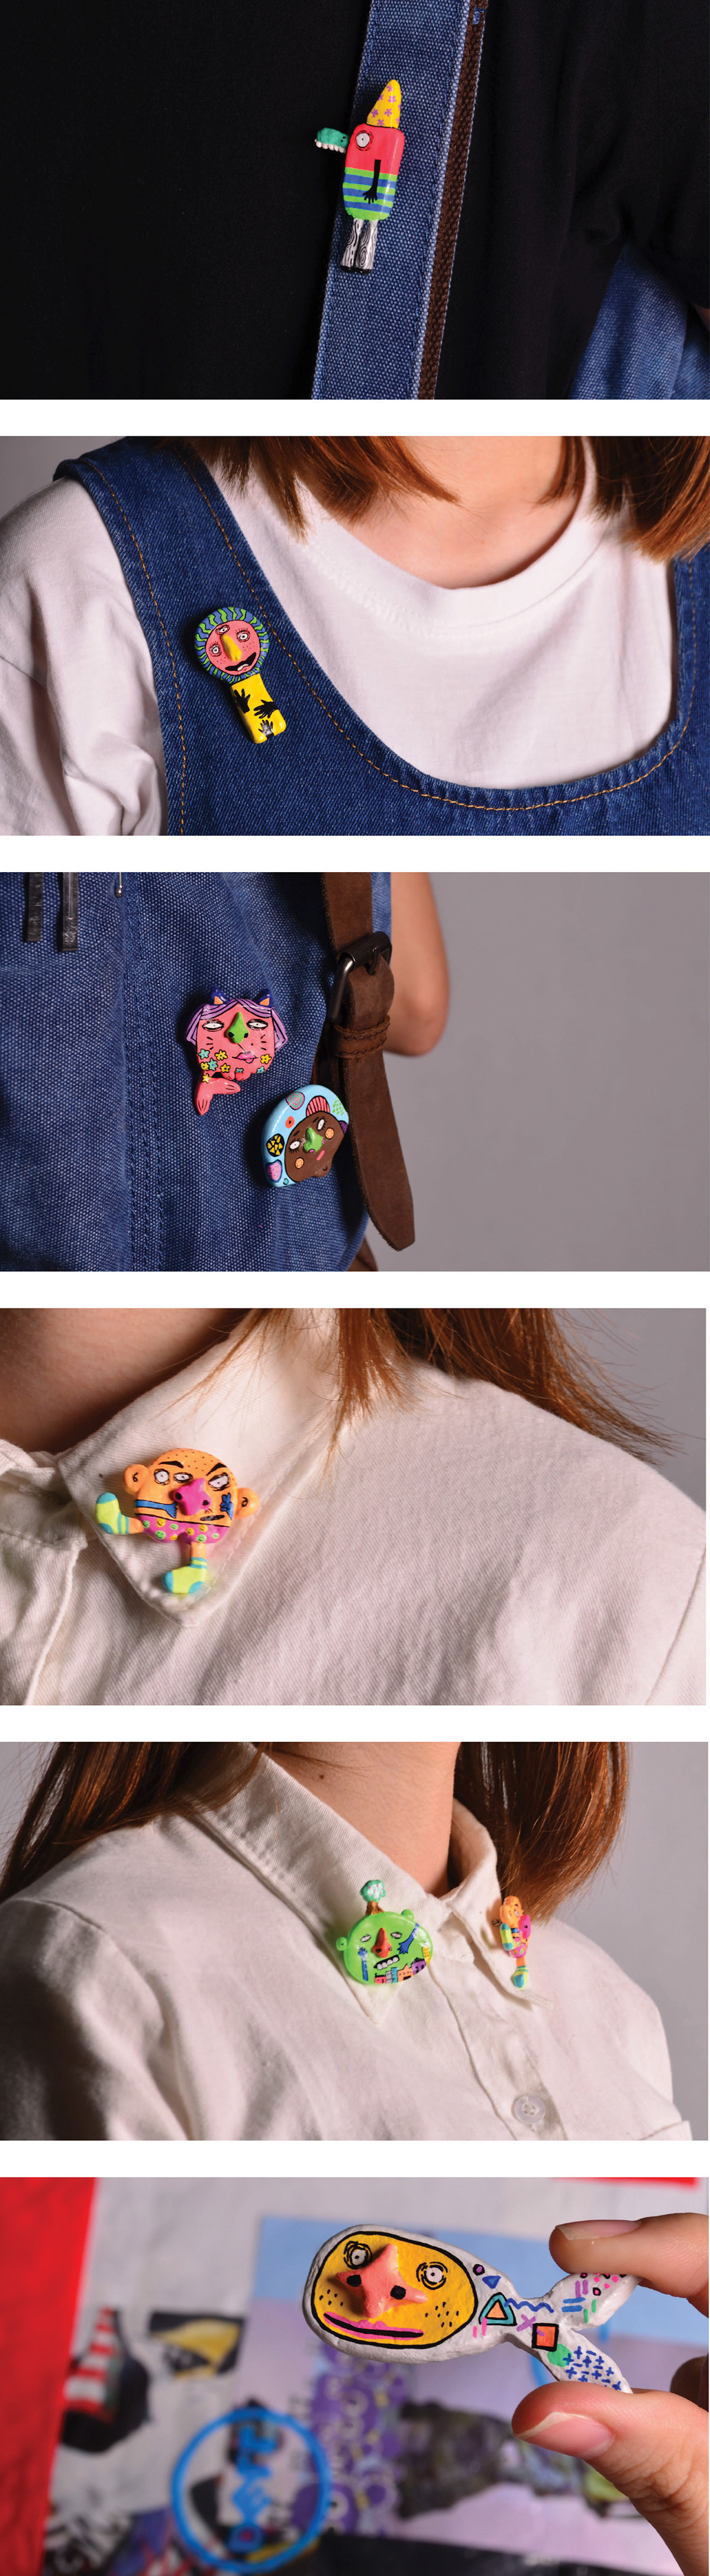 student art design Dasein lab factory handmade pin shop fashionwear tshirt experiment paperclay